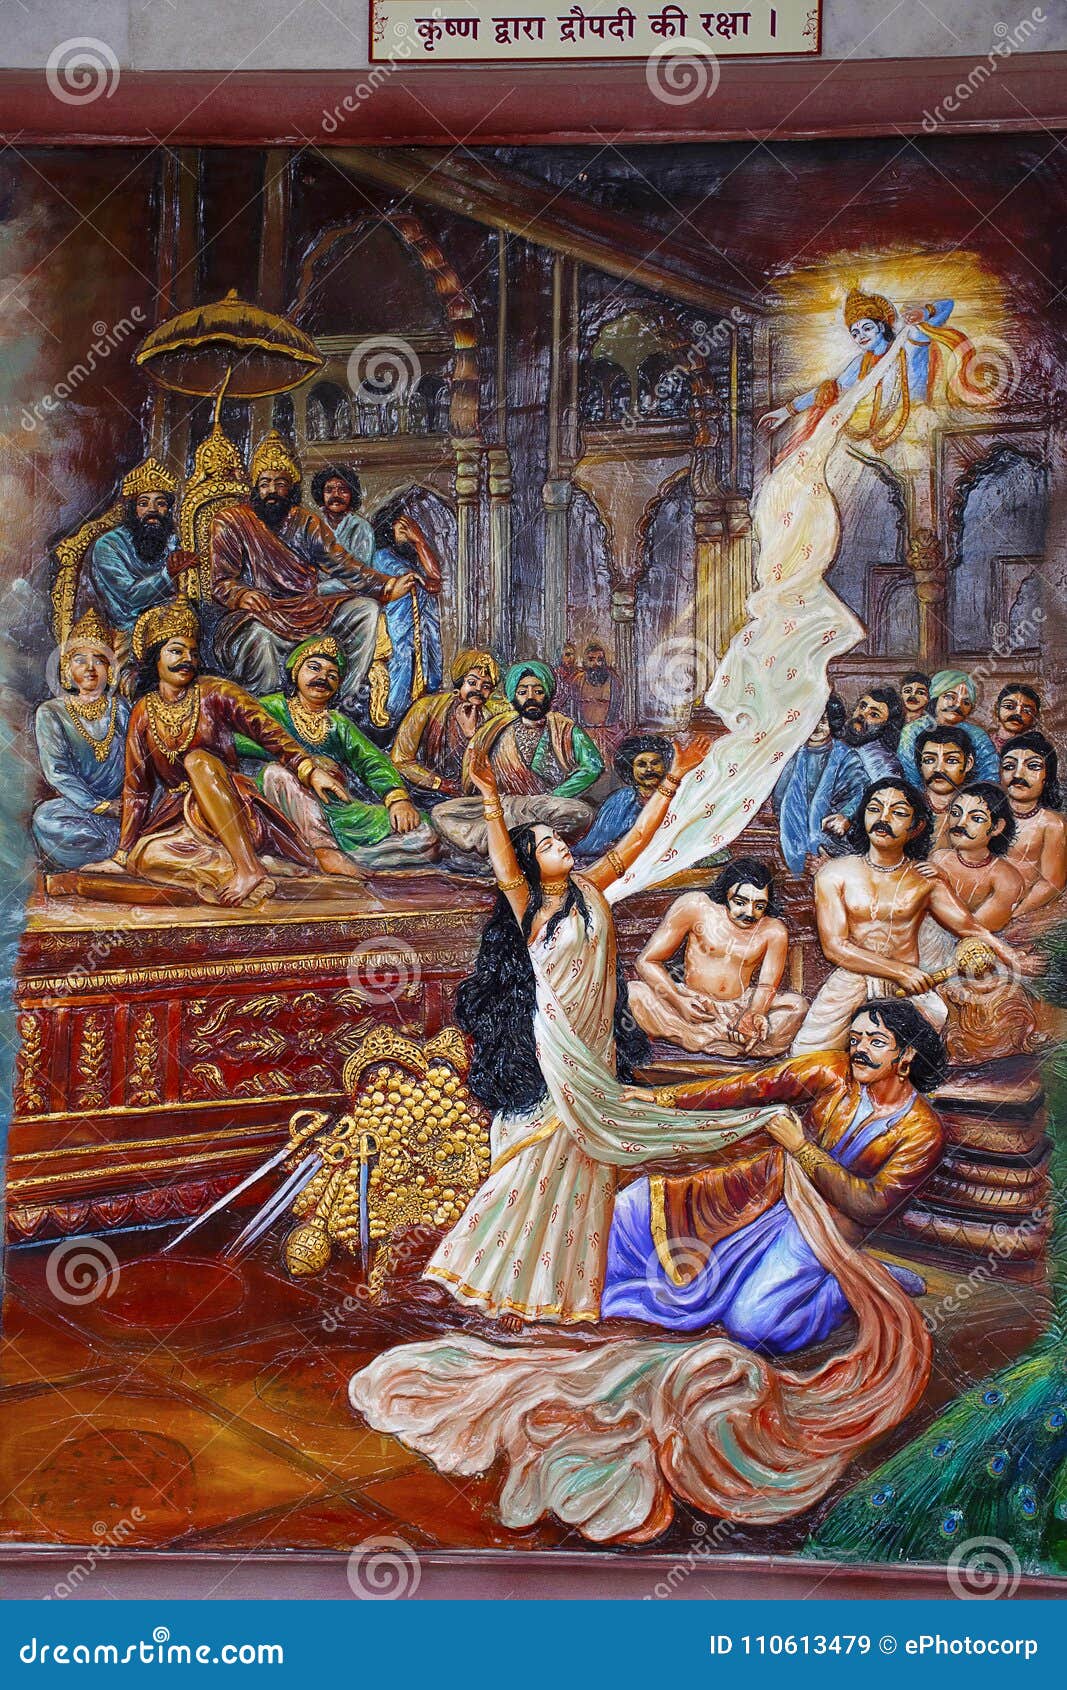 Download Krishna Arjun Mahabharata King Wallpaper | Wallpapers.com